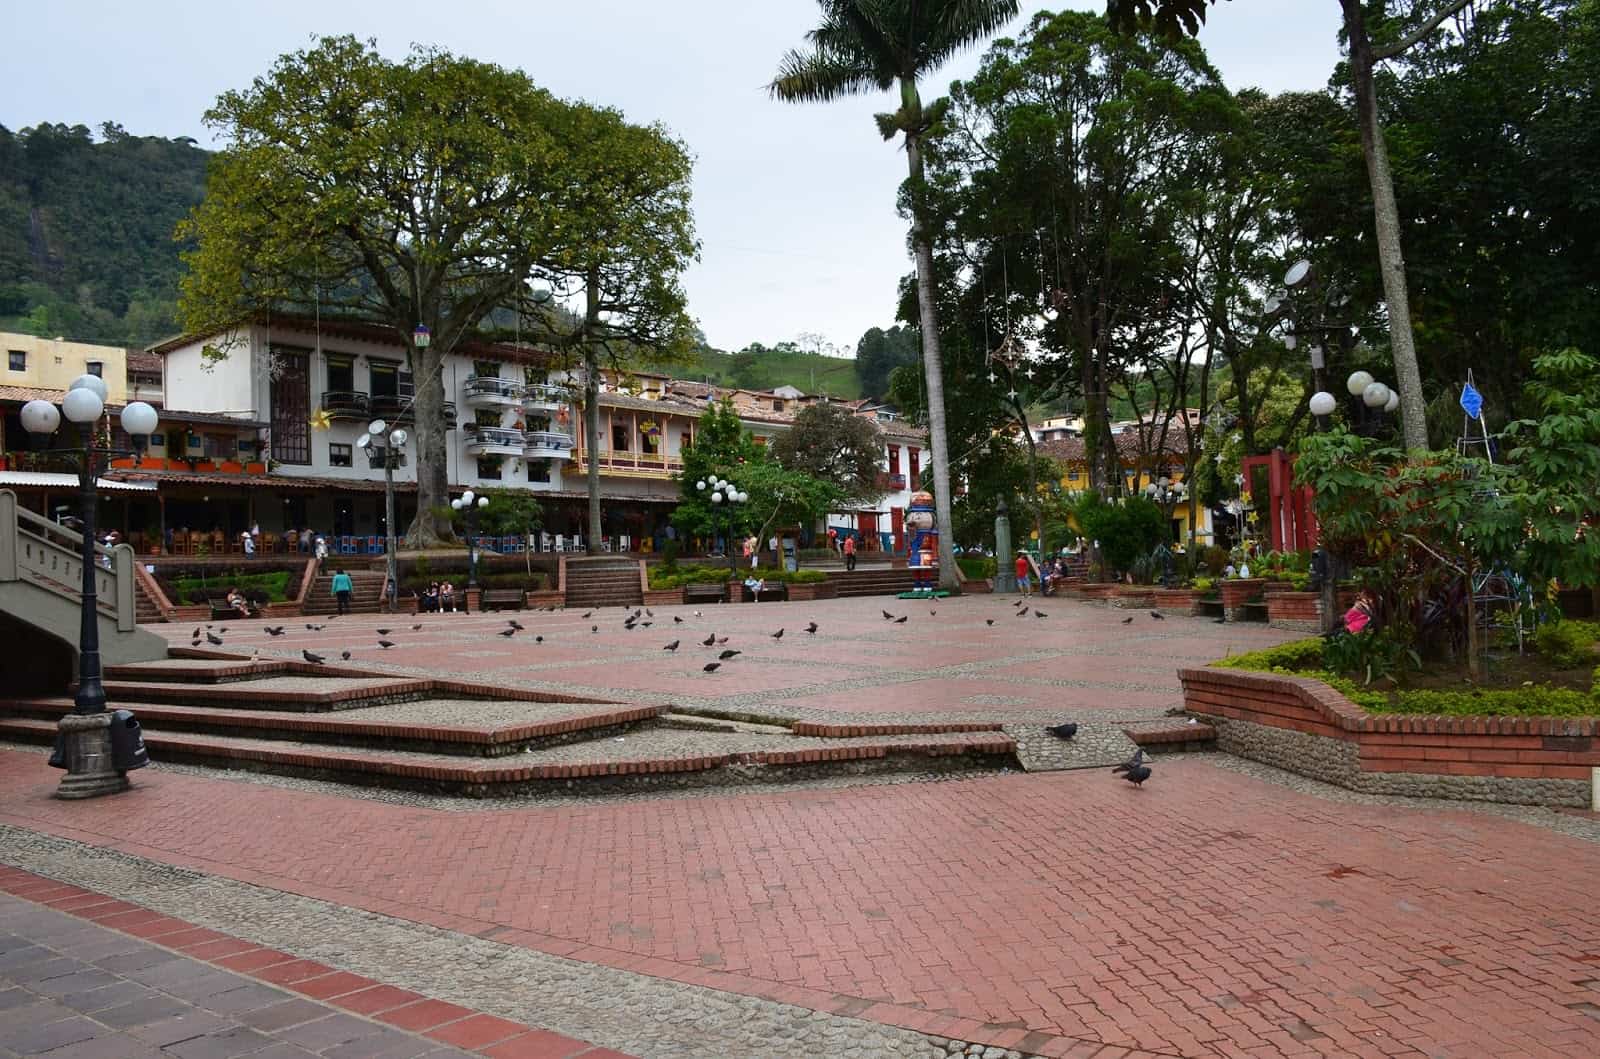 Plaza in Jericó, Antioquia, Colombia